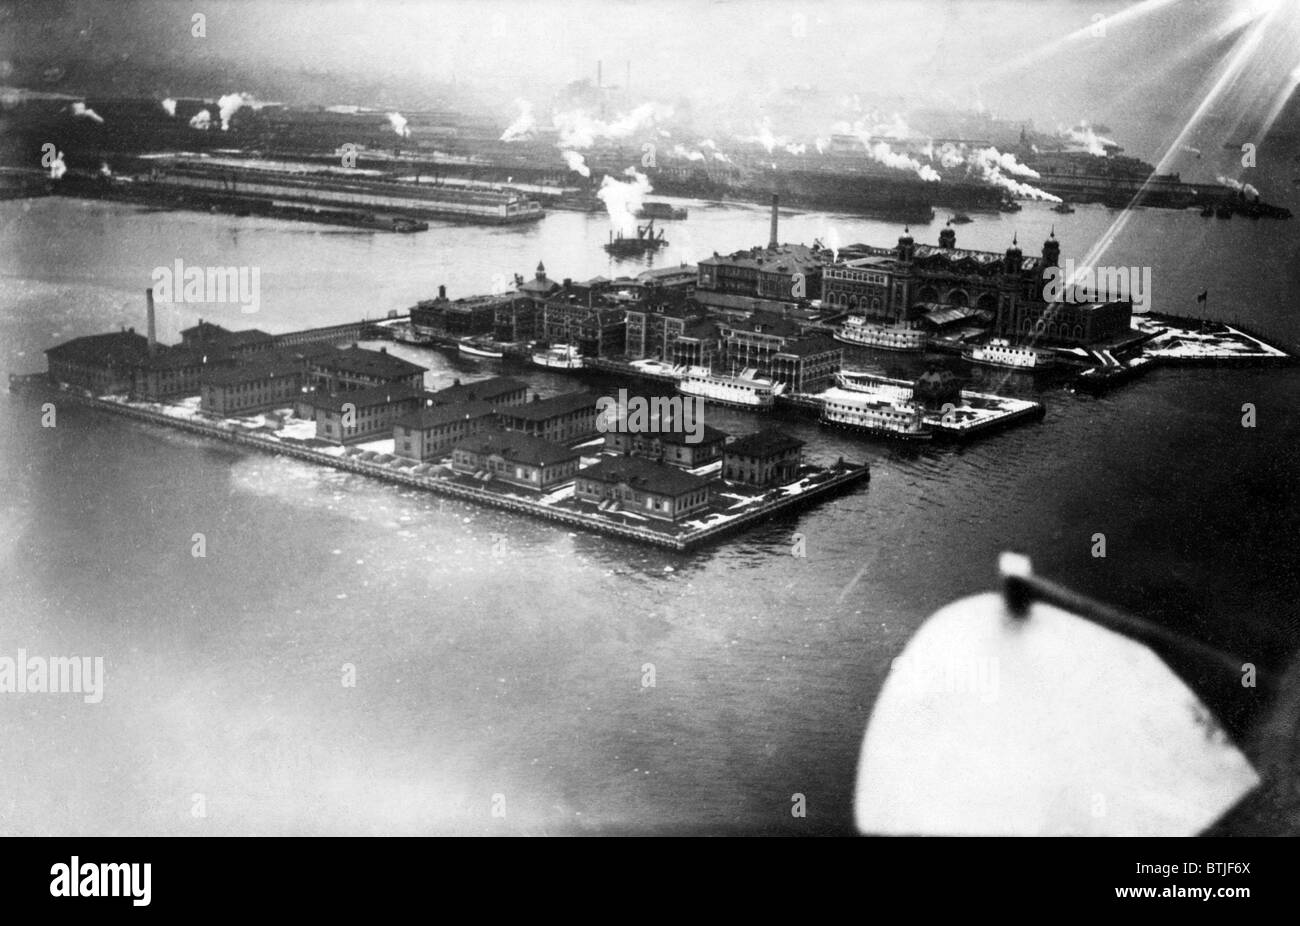 Blick auf Ellis Island von Flugzeug, New York City, ca. 1912. CSU-Archiv/Courtesy Everett Collection Stockfoto